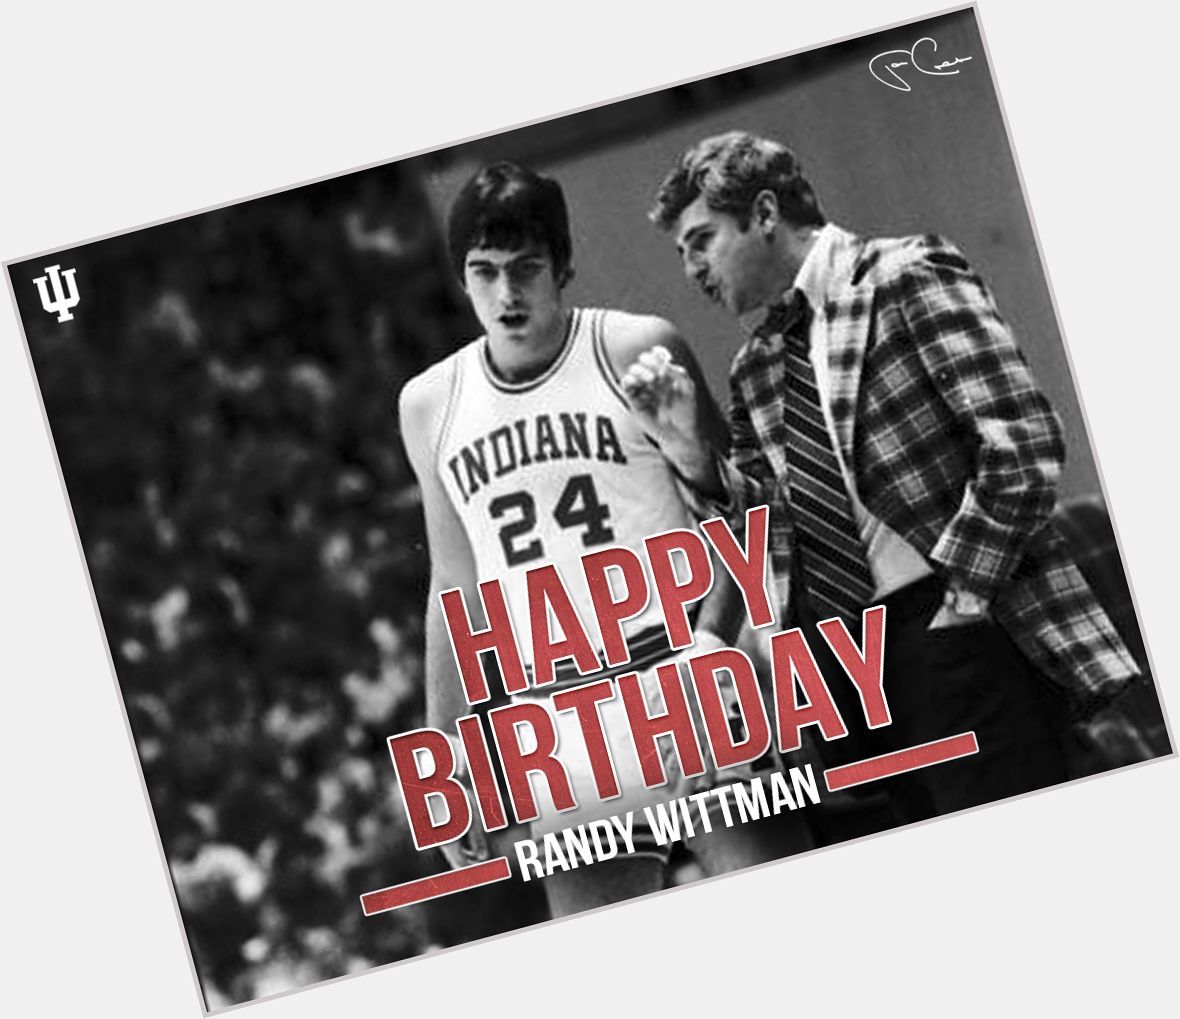 Happy birthday to head coach Randy Wittman! 